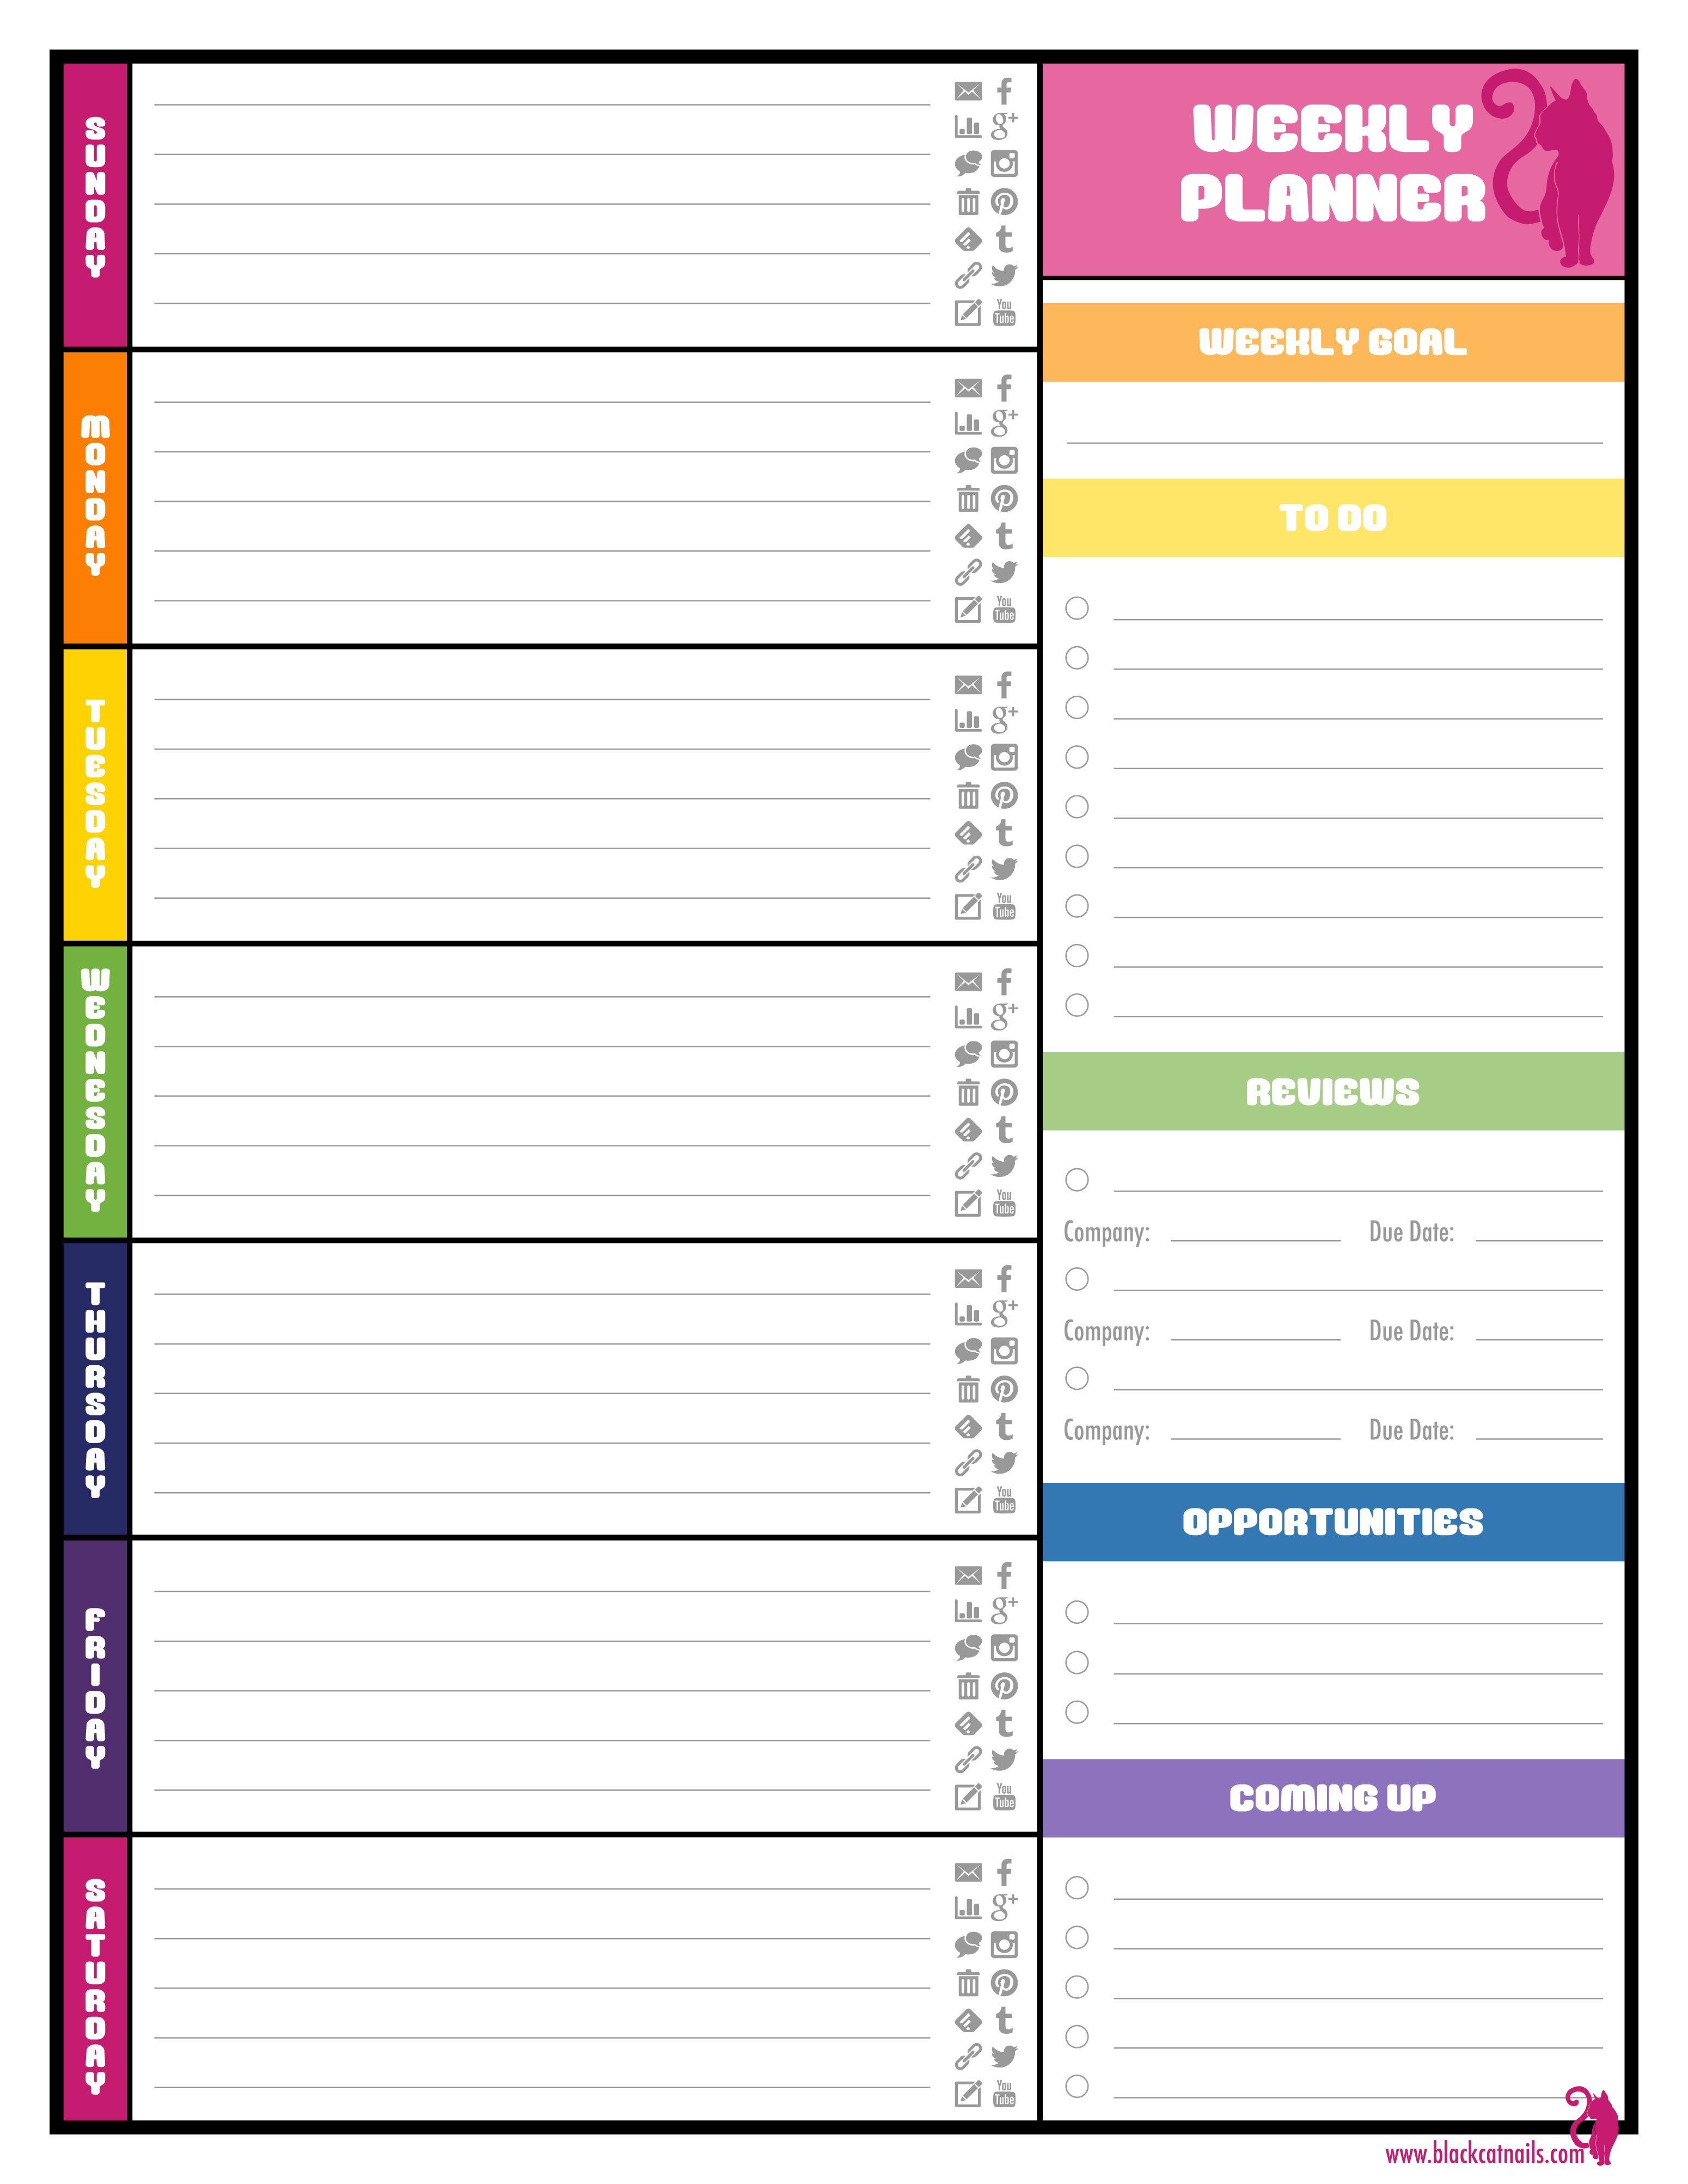 Colorful Weekly Blogging Planner Image | Blog Life | Pinterest - Free Printable Weekly Planner